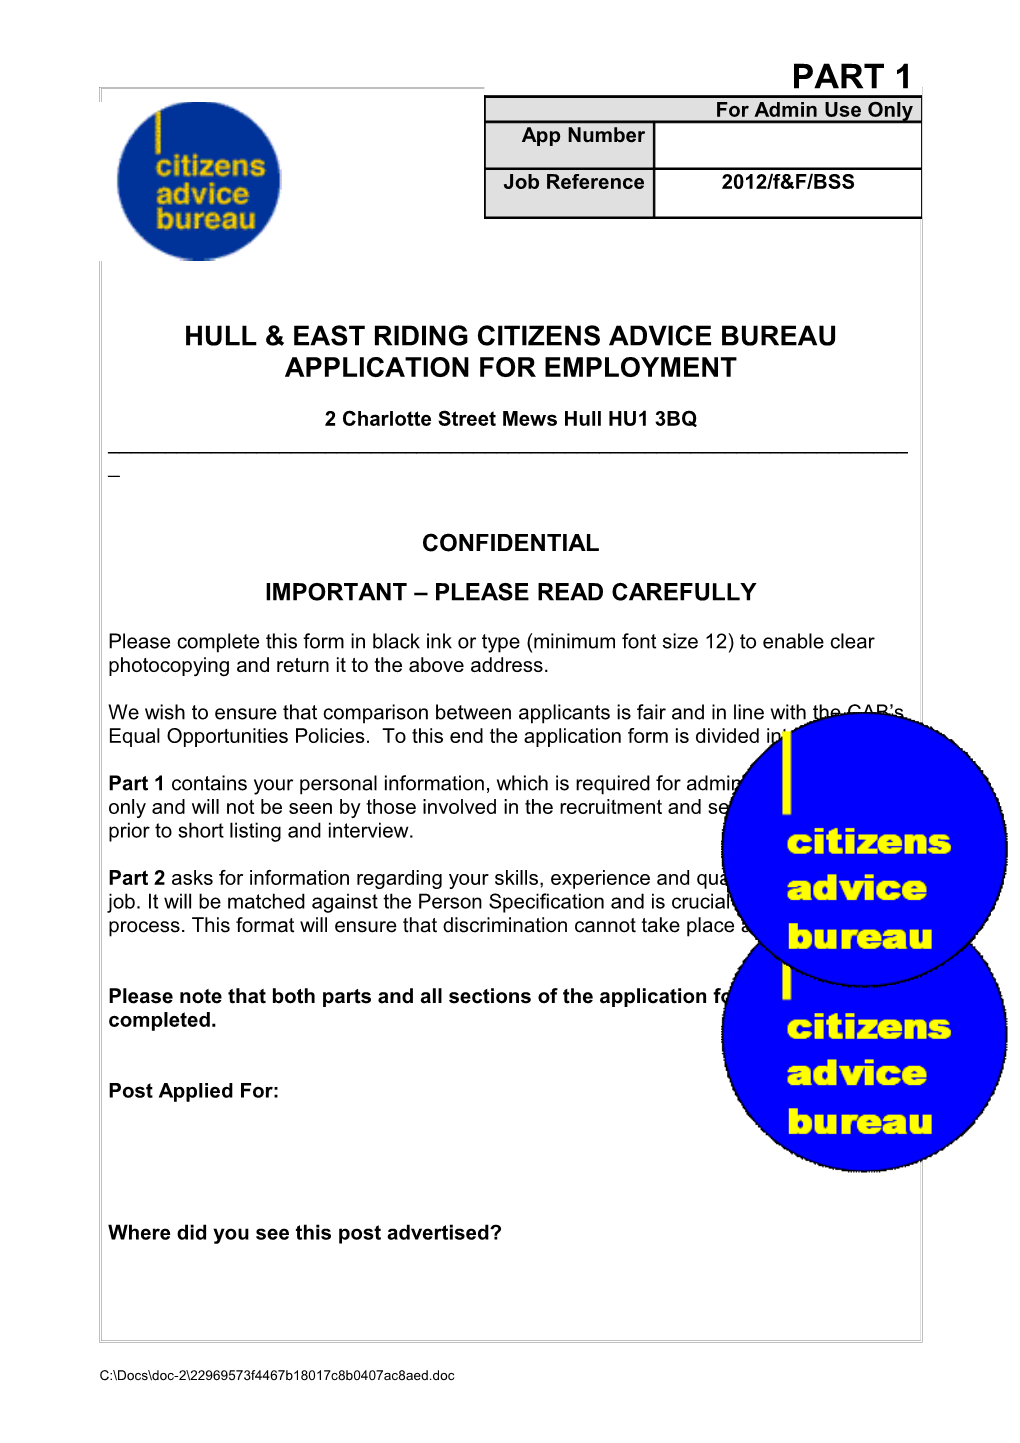 Hull & East Riding Citizens Advice Bureau